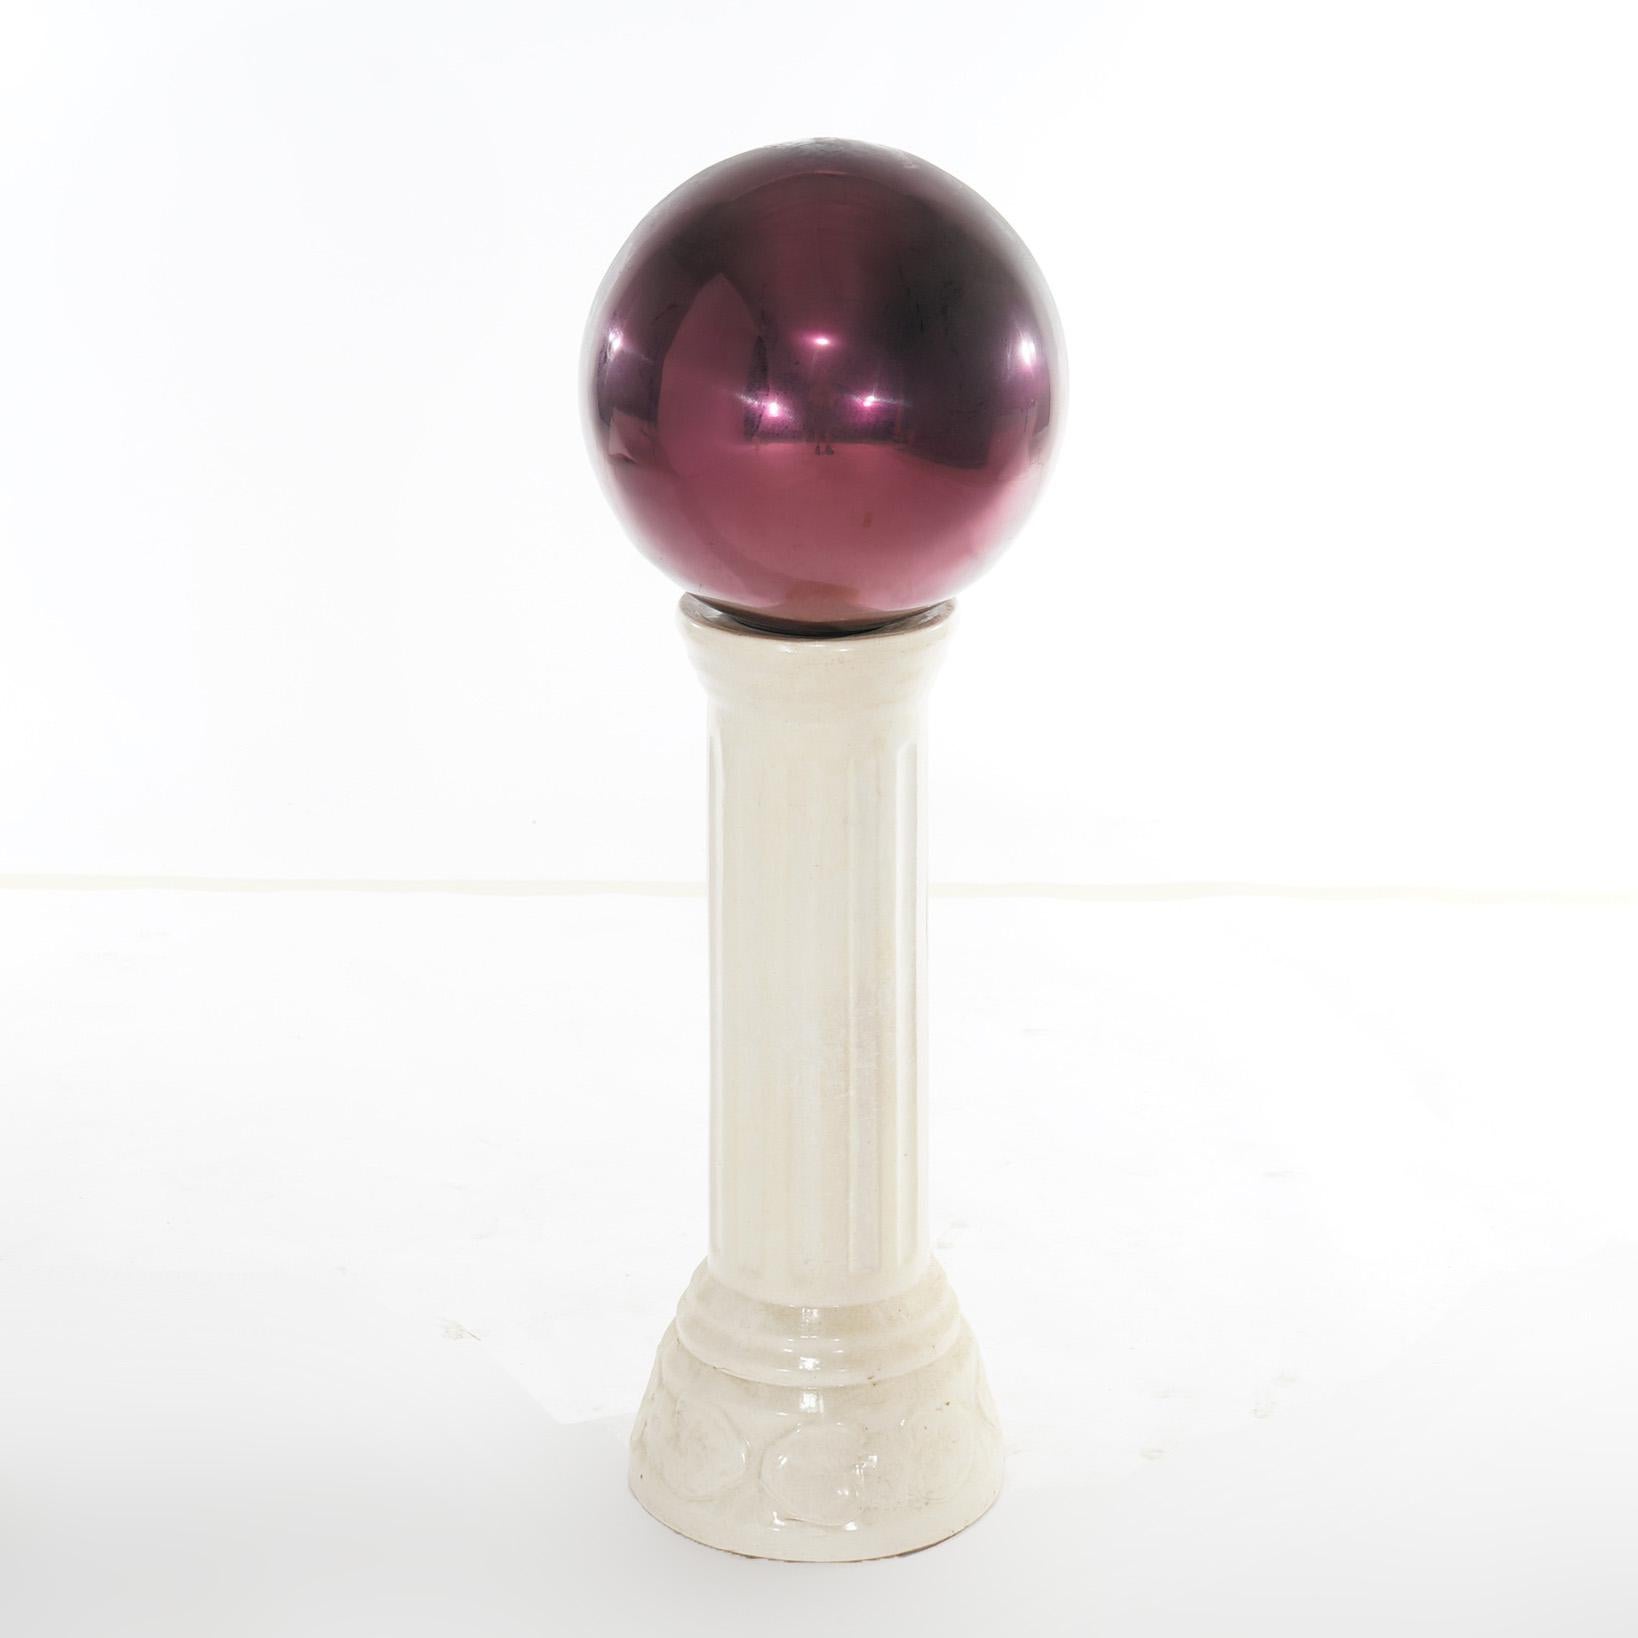 A garden gazing ball offers glass globe on pottery pedestal, 20th century

Measures - 35